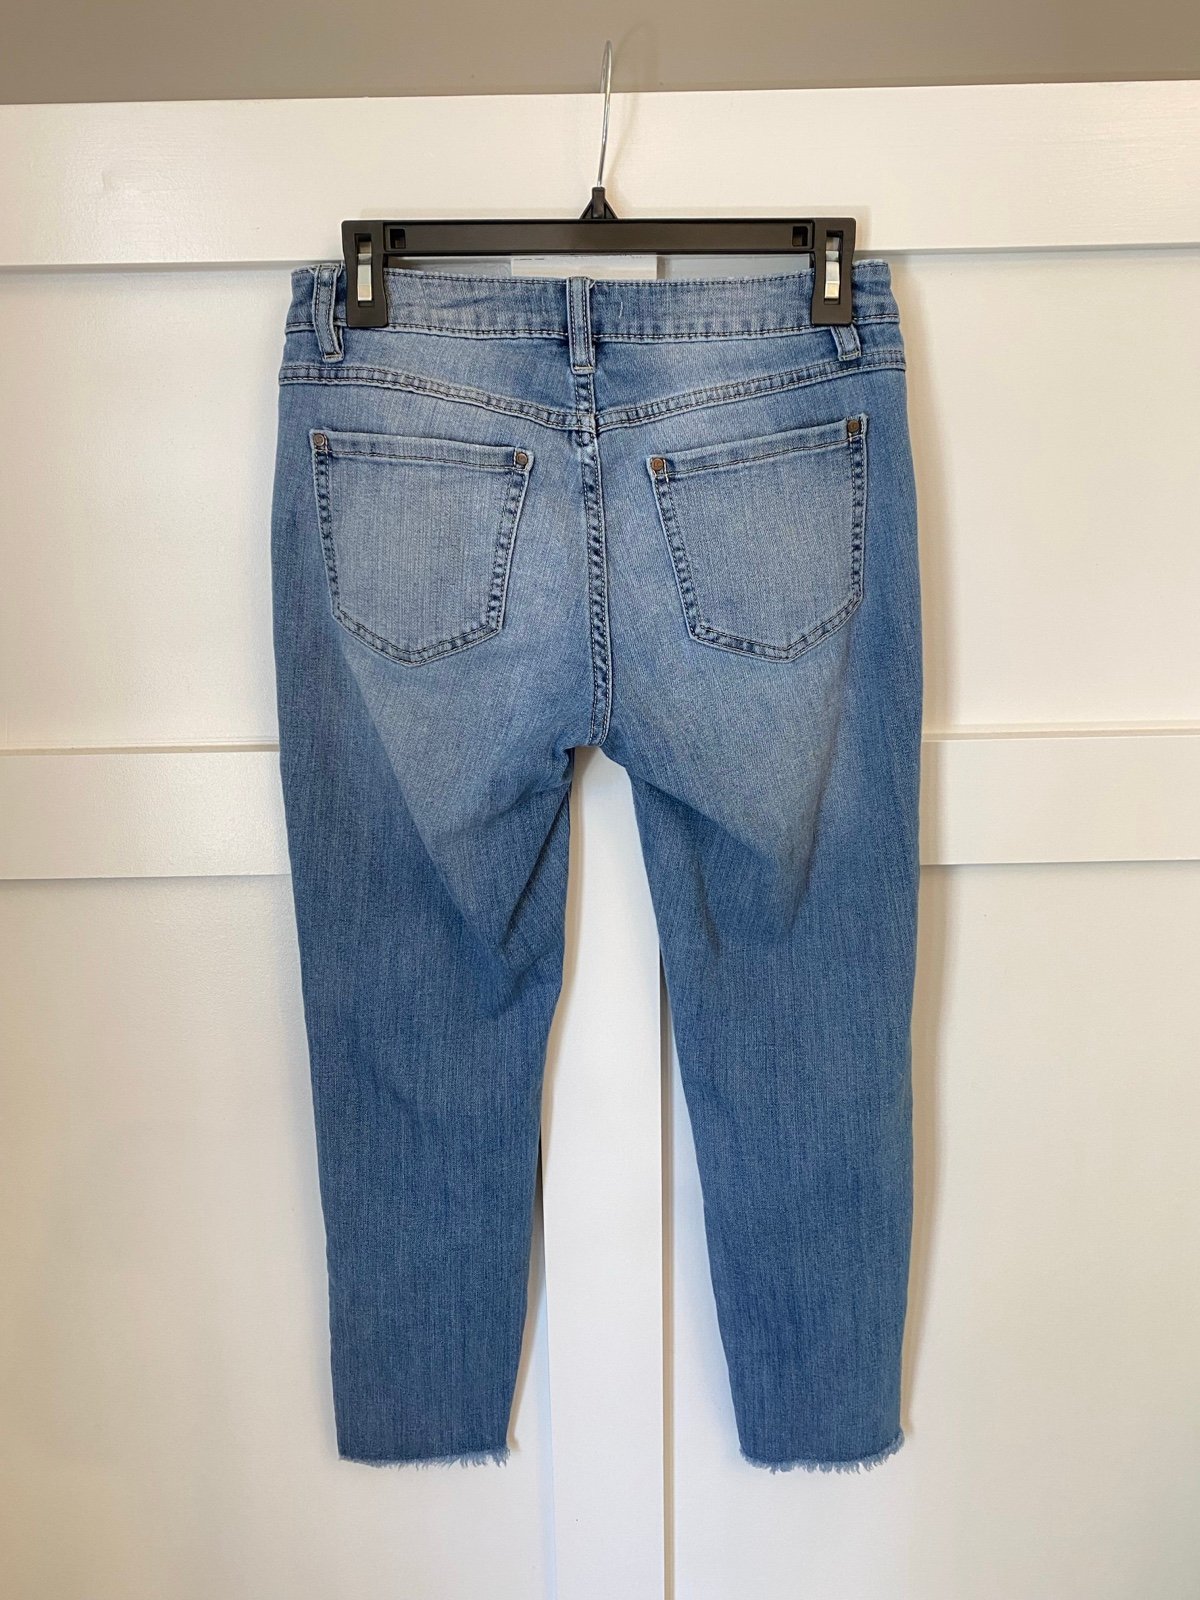 Beautiful Lauren Conrad Sz 4 skinny jeans IPeoLTCST well sale